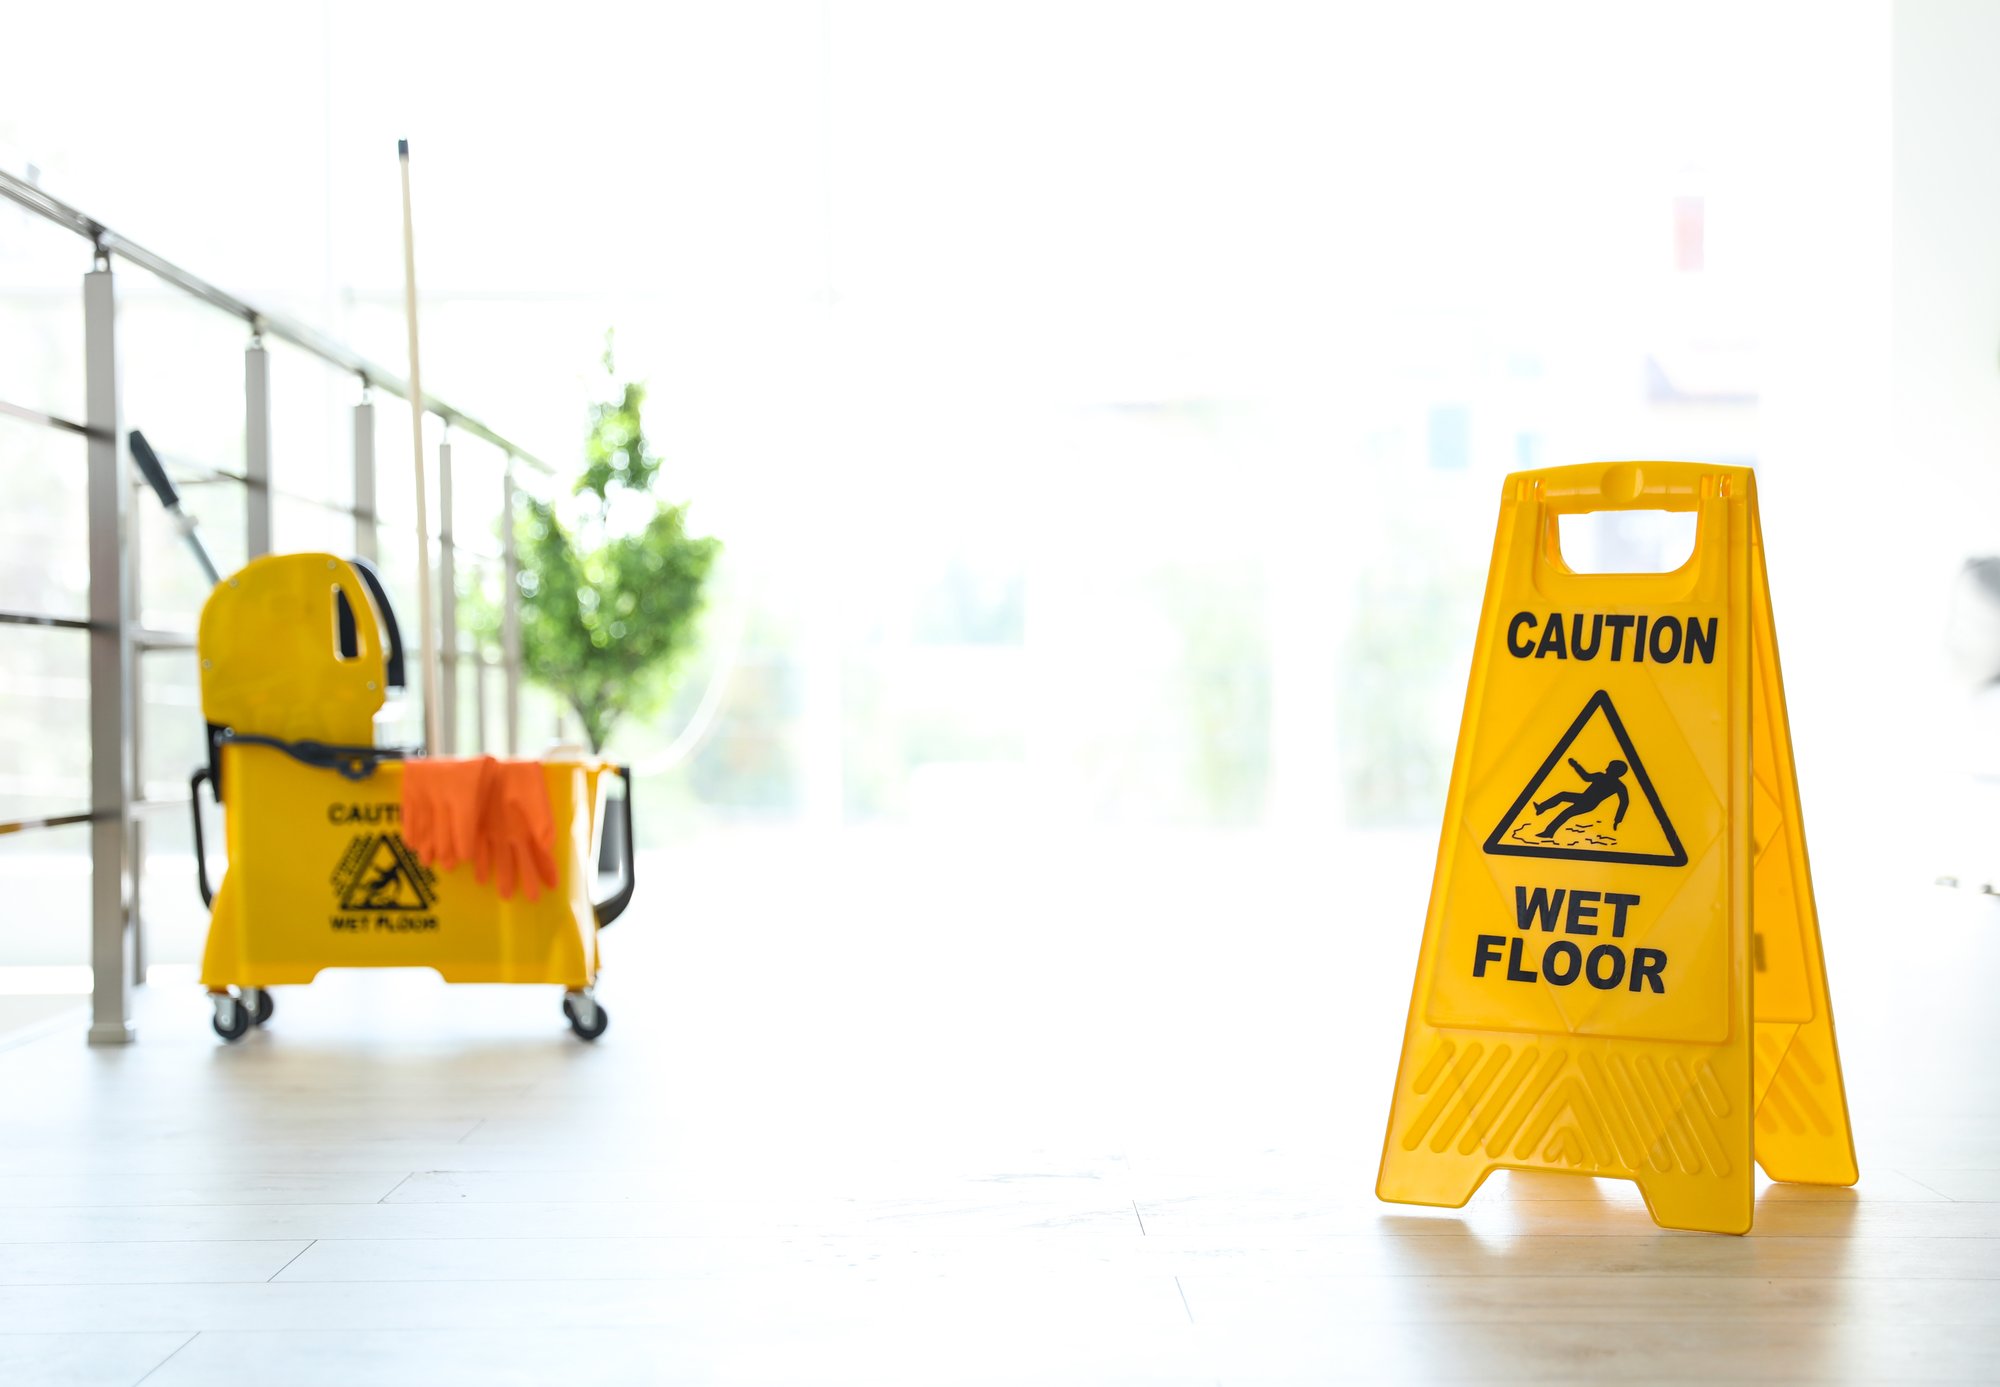 Keep wet floors as they. Caution wet Floor ведро. Ведро wet Floor. Caution wet Floor швабра. Cautious phrases.